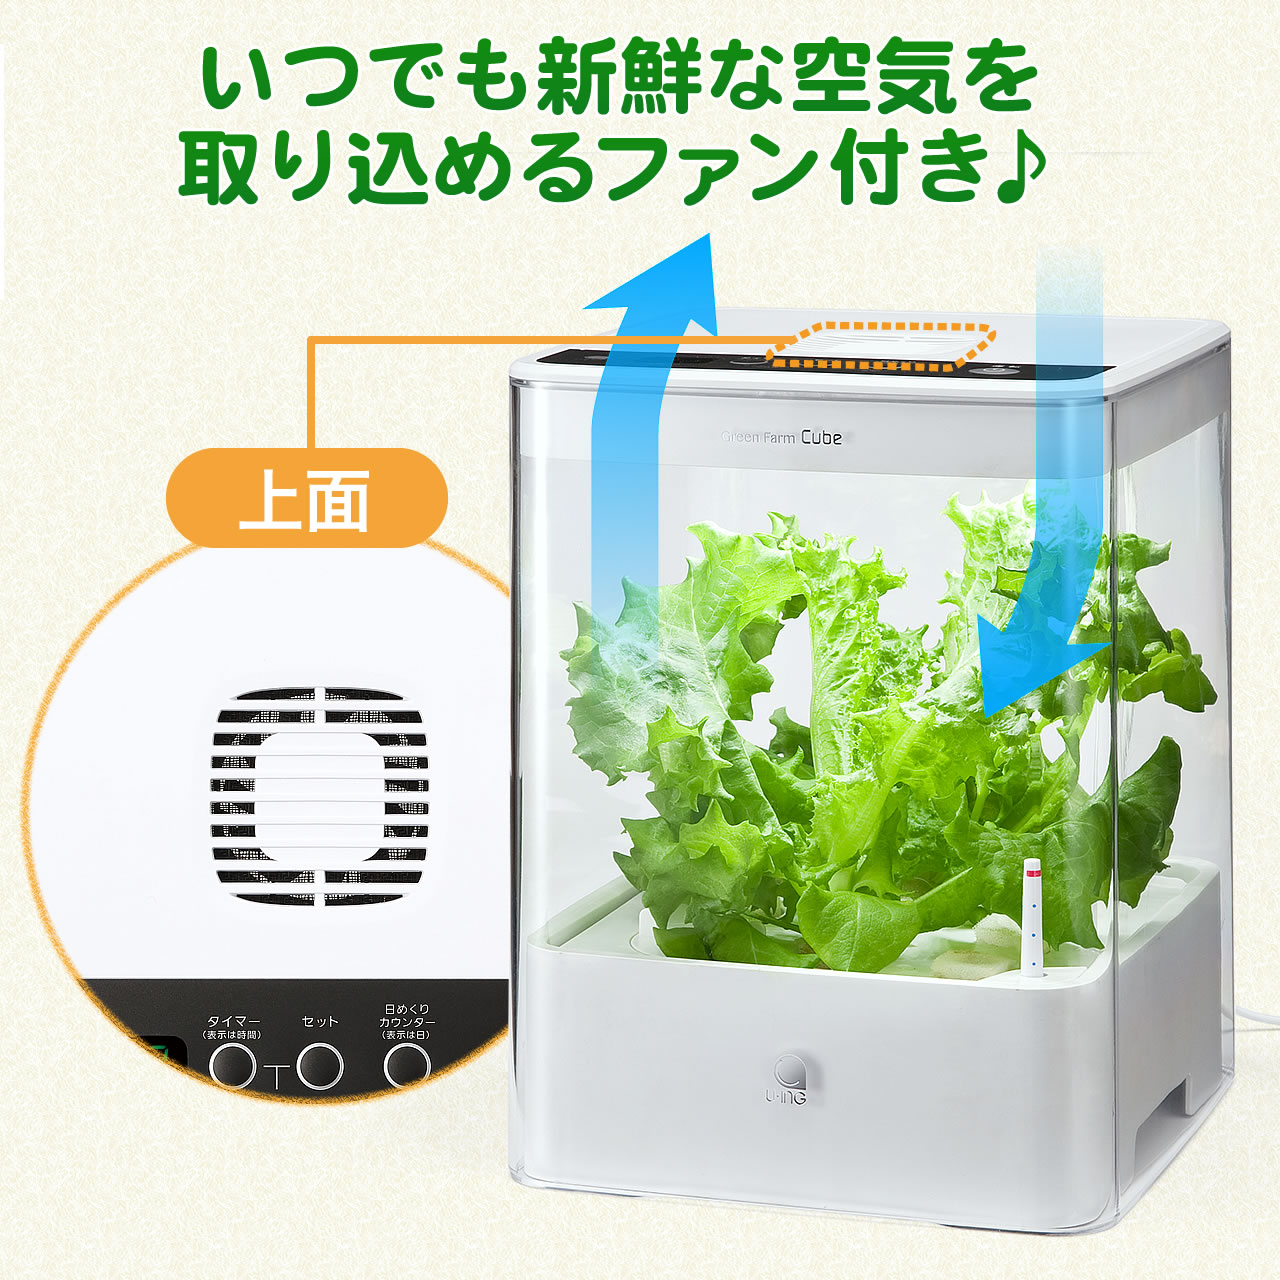 Green Farm Cube  ユーイング水耕栽培器　UH-CB01G1